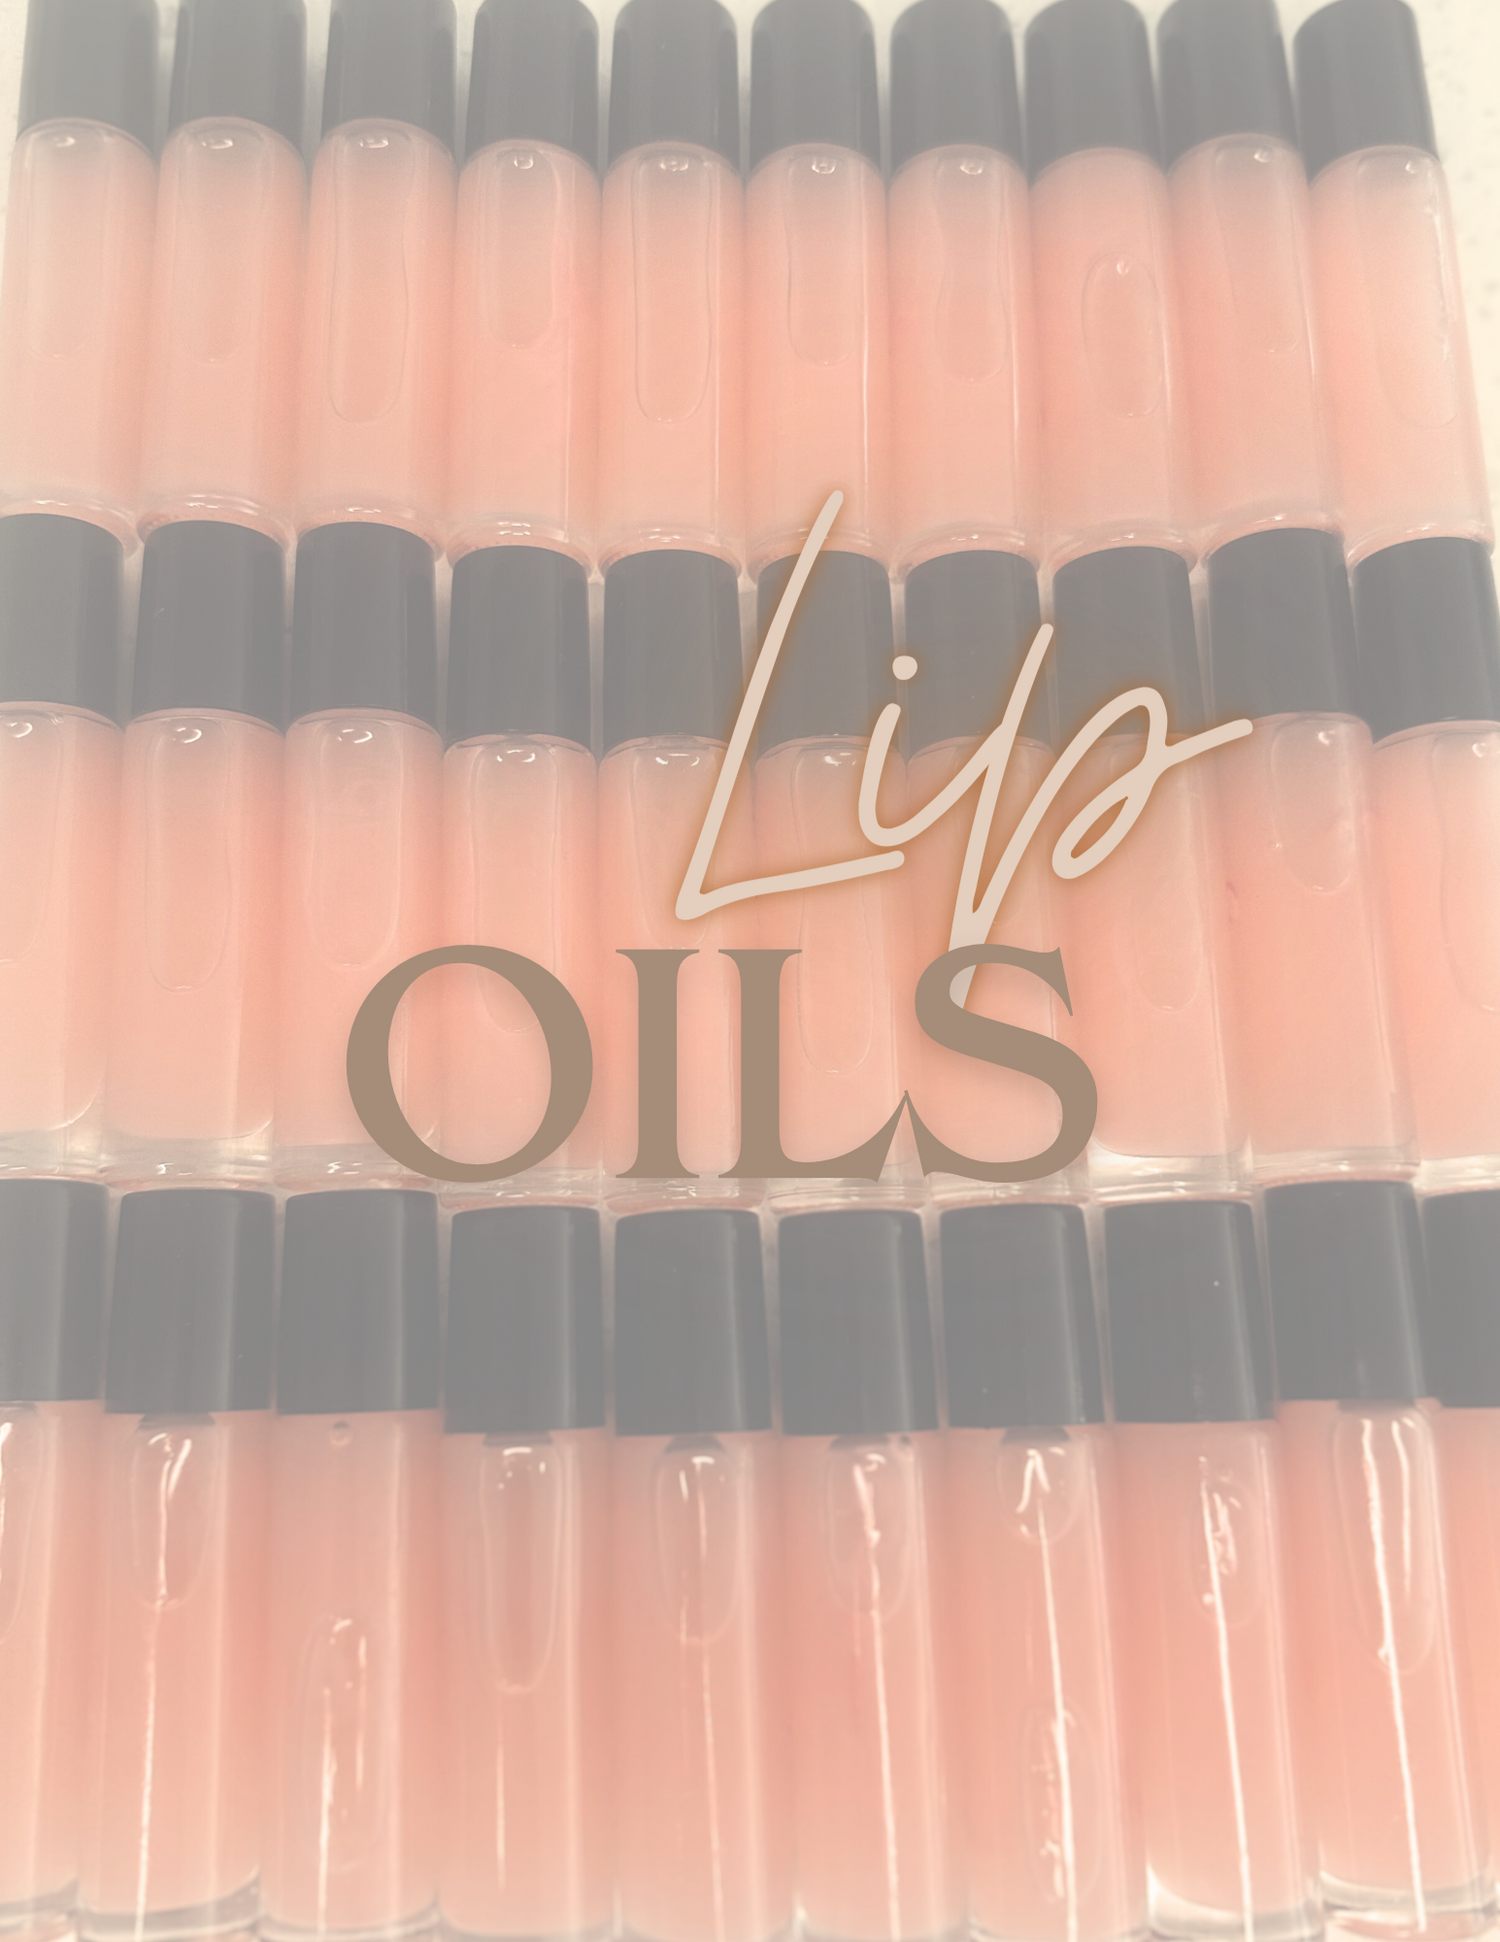 Lip Oils